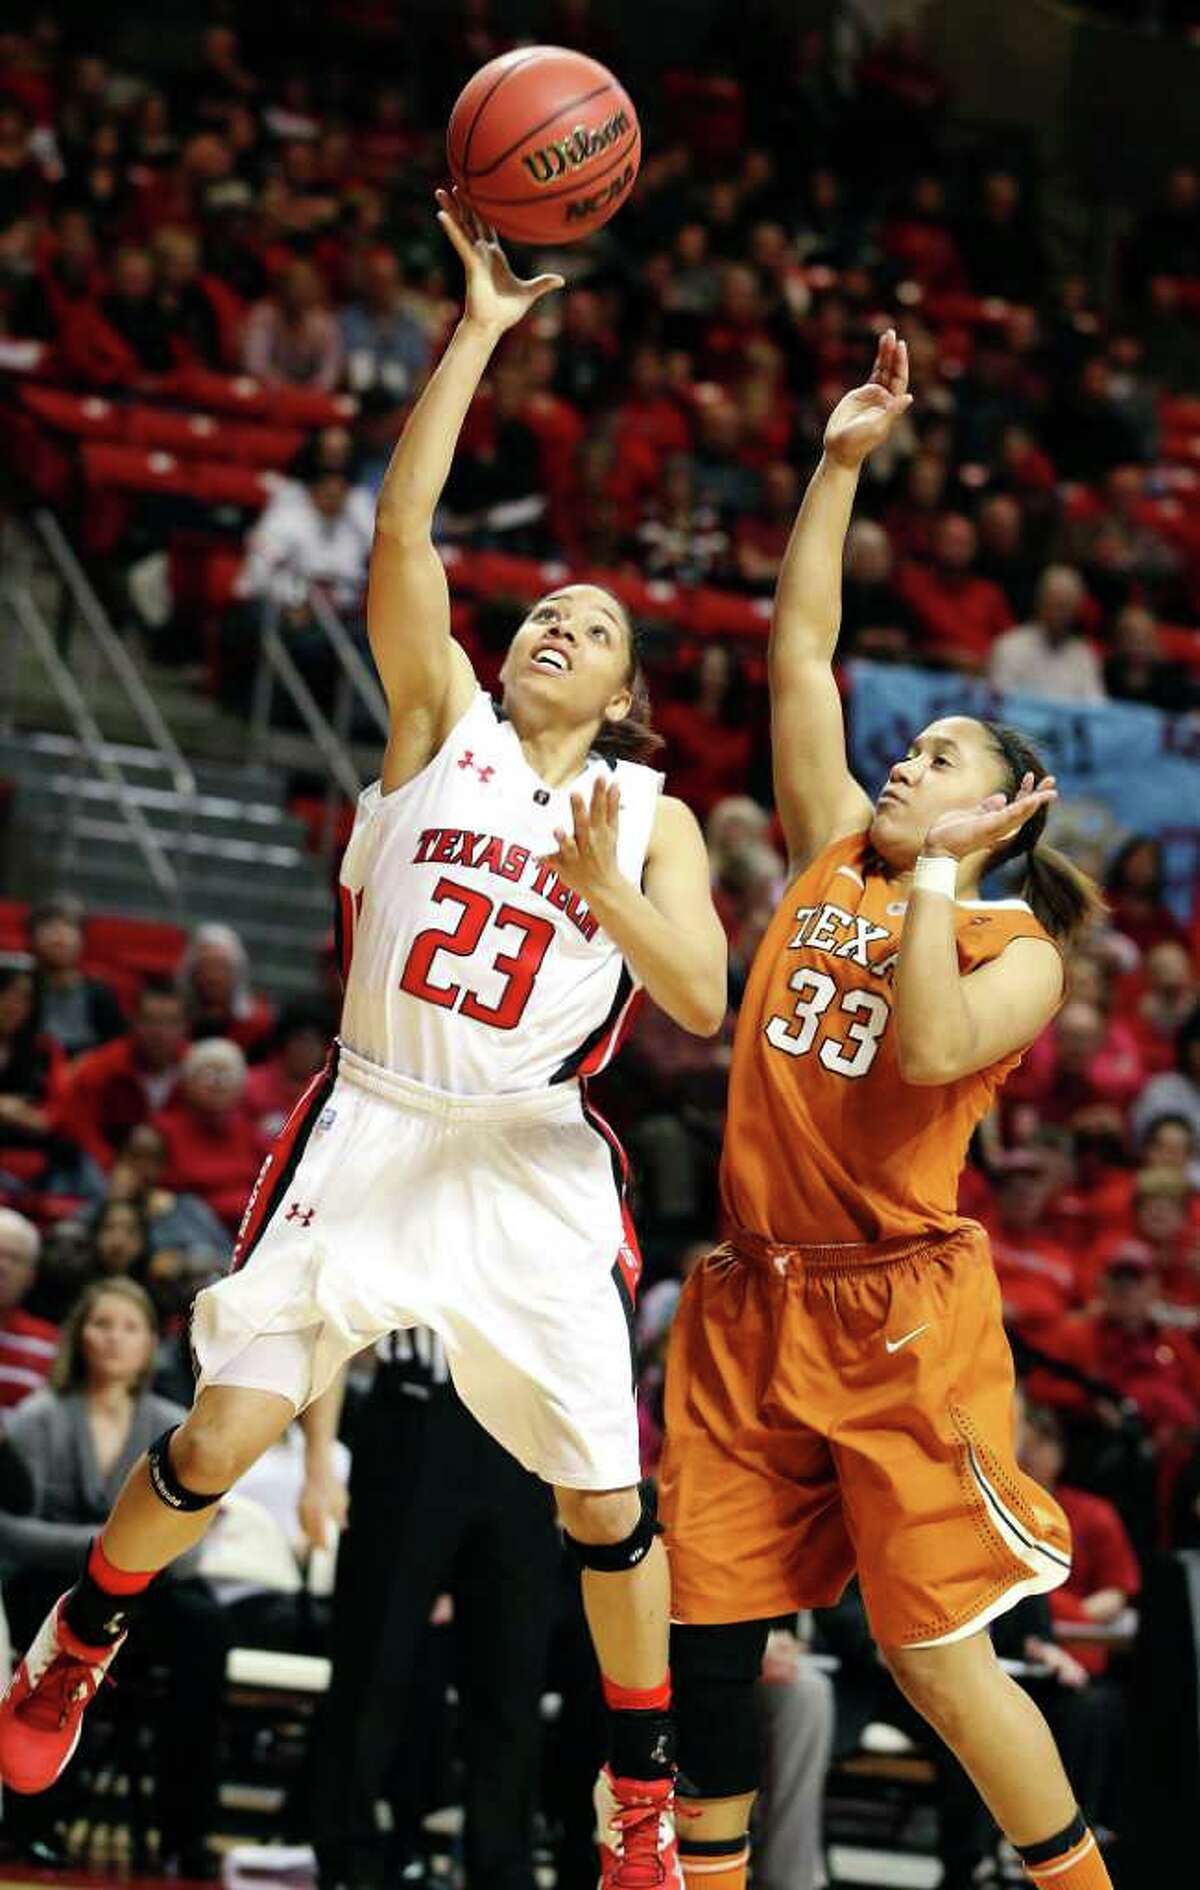 Texas Tech's Monique Smalls (left) gets by Texas' Ashleigh Fontenette for a shot.